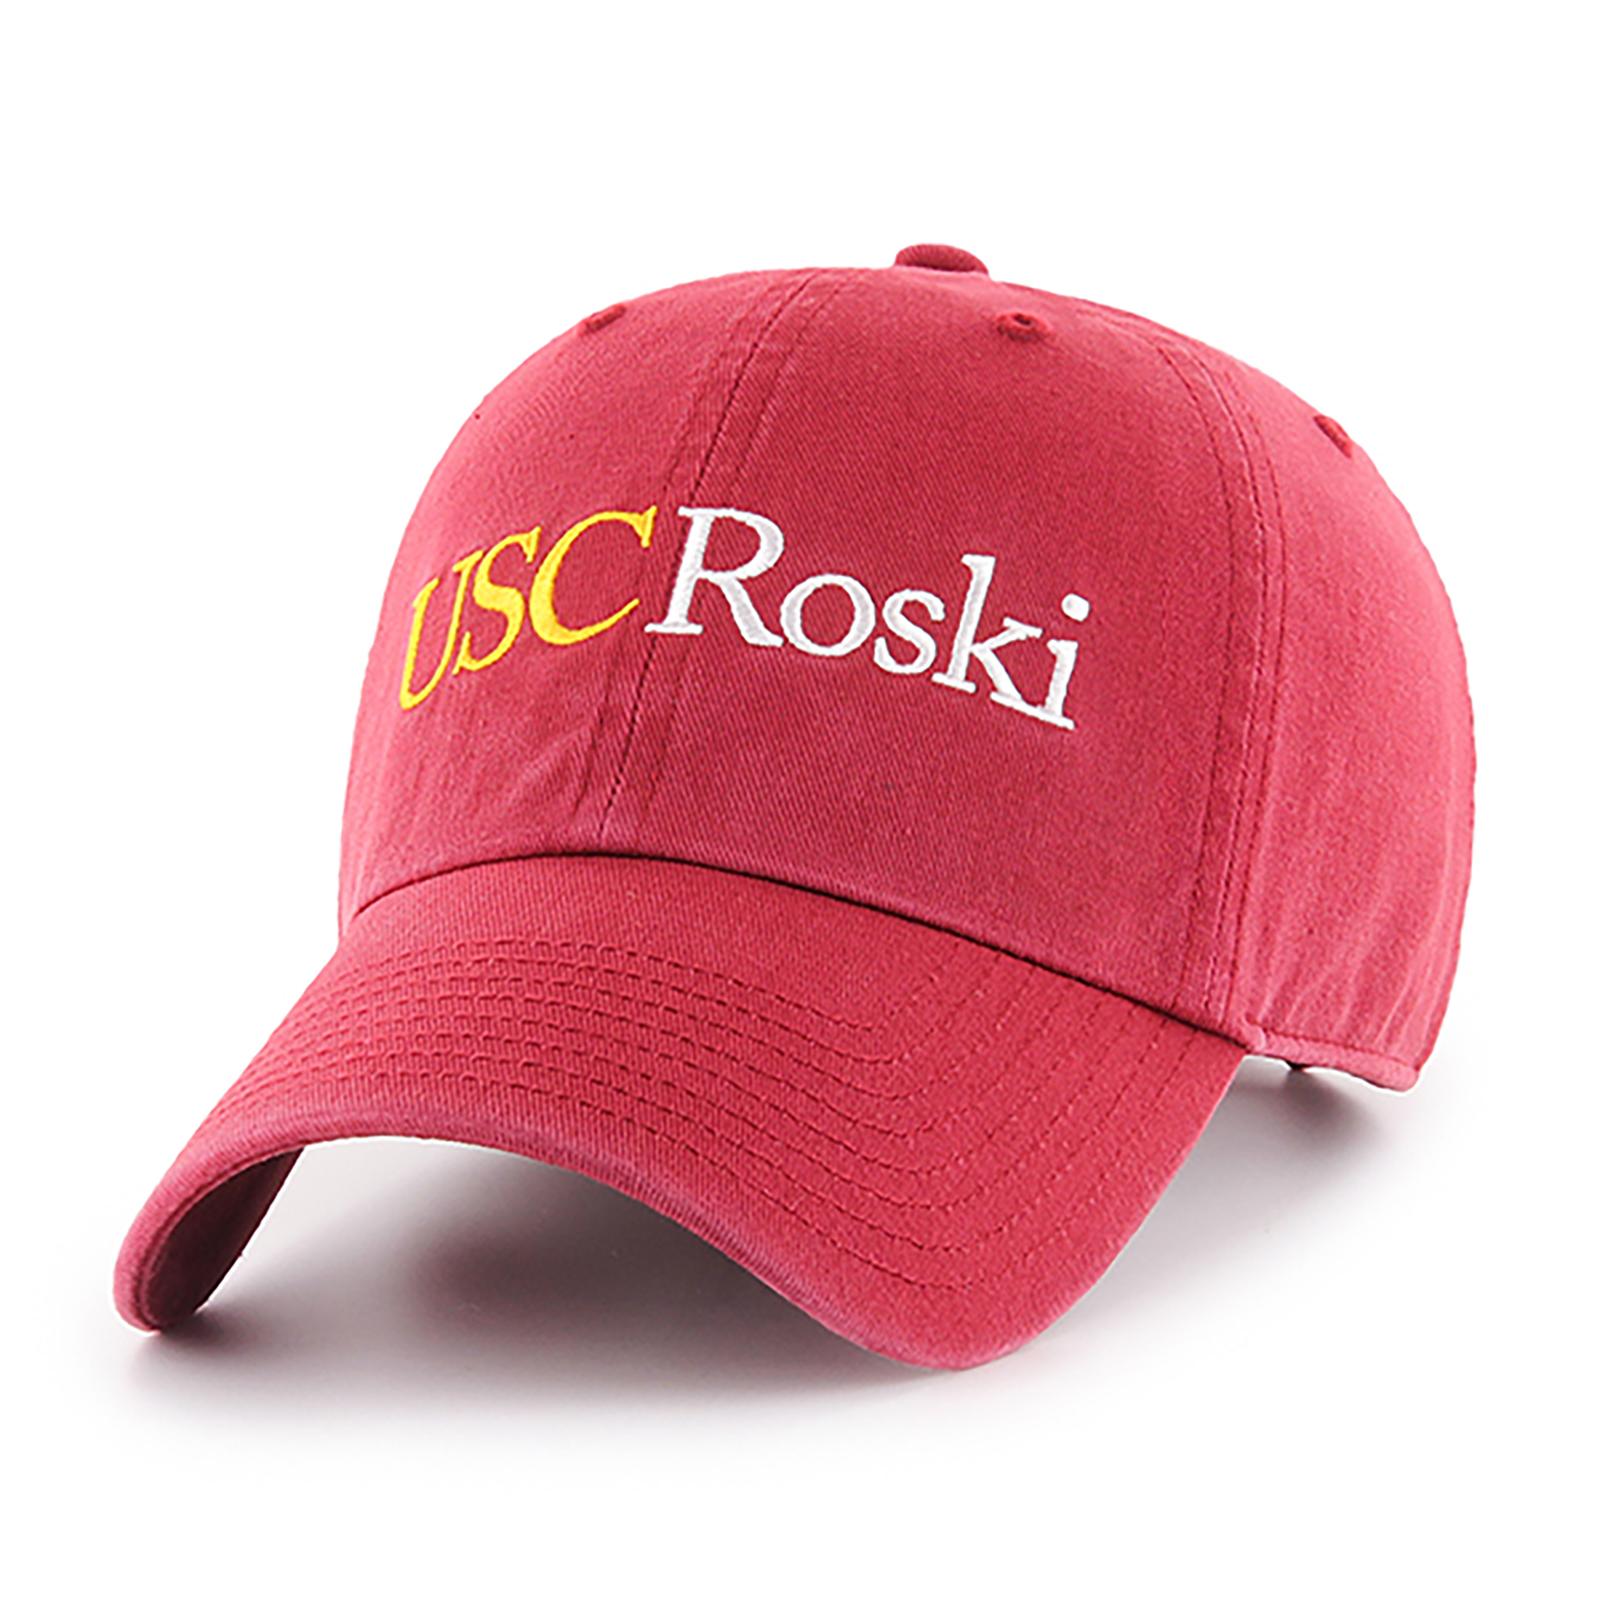 USC School of Roski Art & Design Cap Cardinal Fits All image01